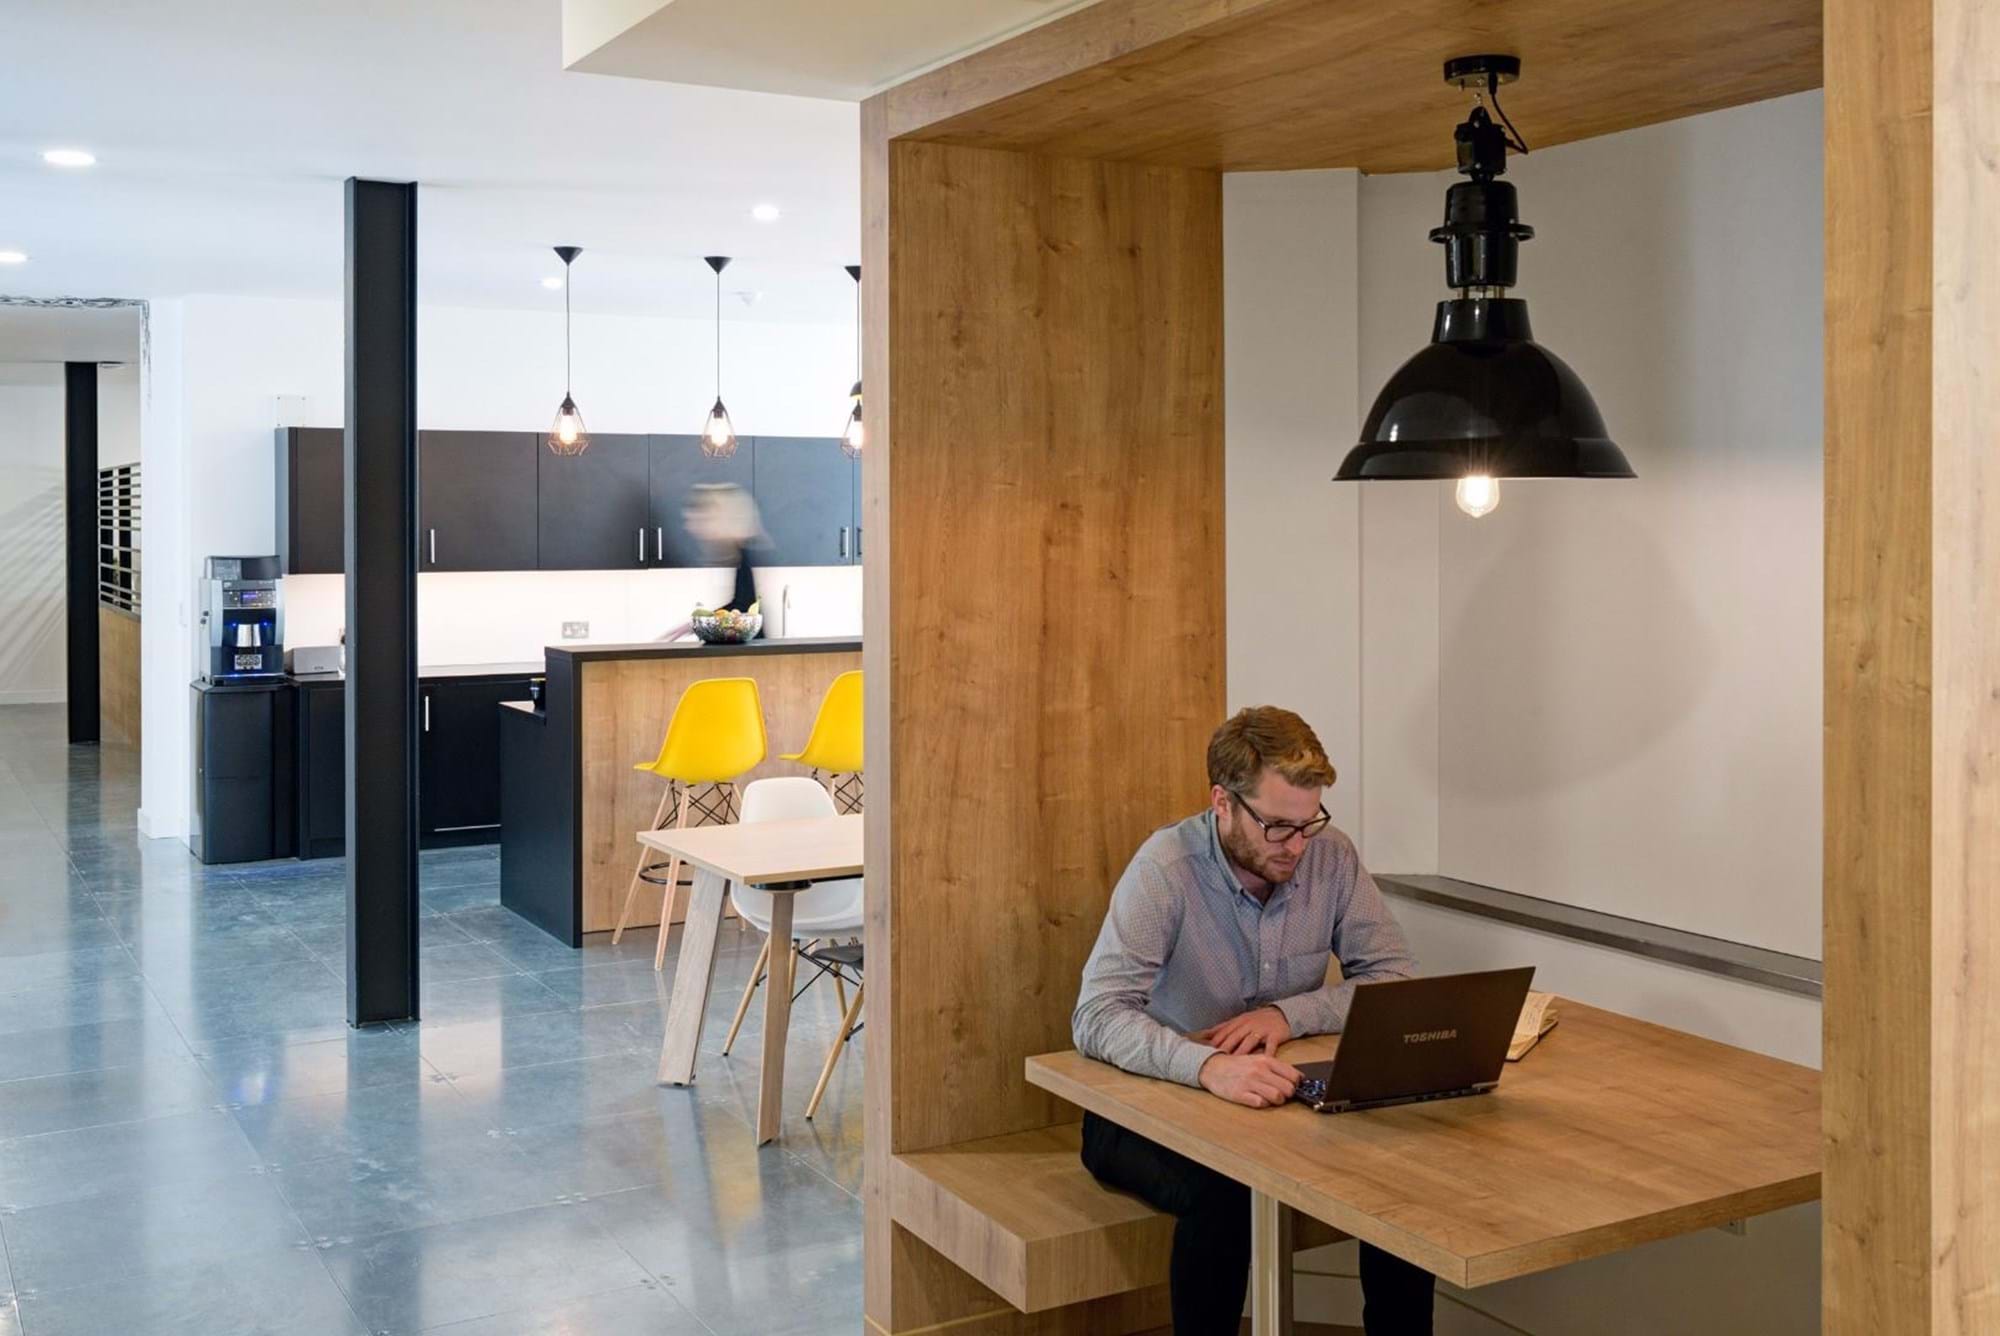 Modus Workspace office design, fit out and refurbishment - Ruderfinn - Ruder Finn 11 highres sRGB.jpg